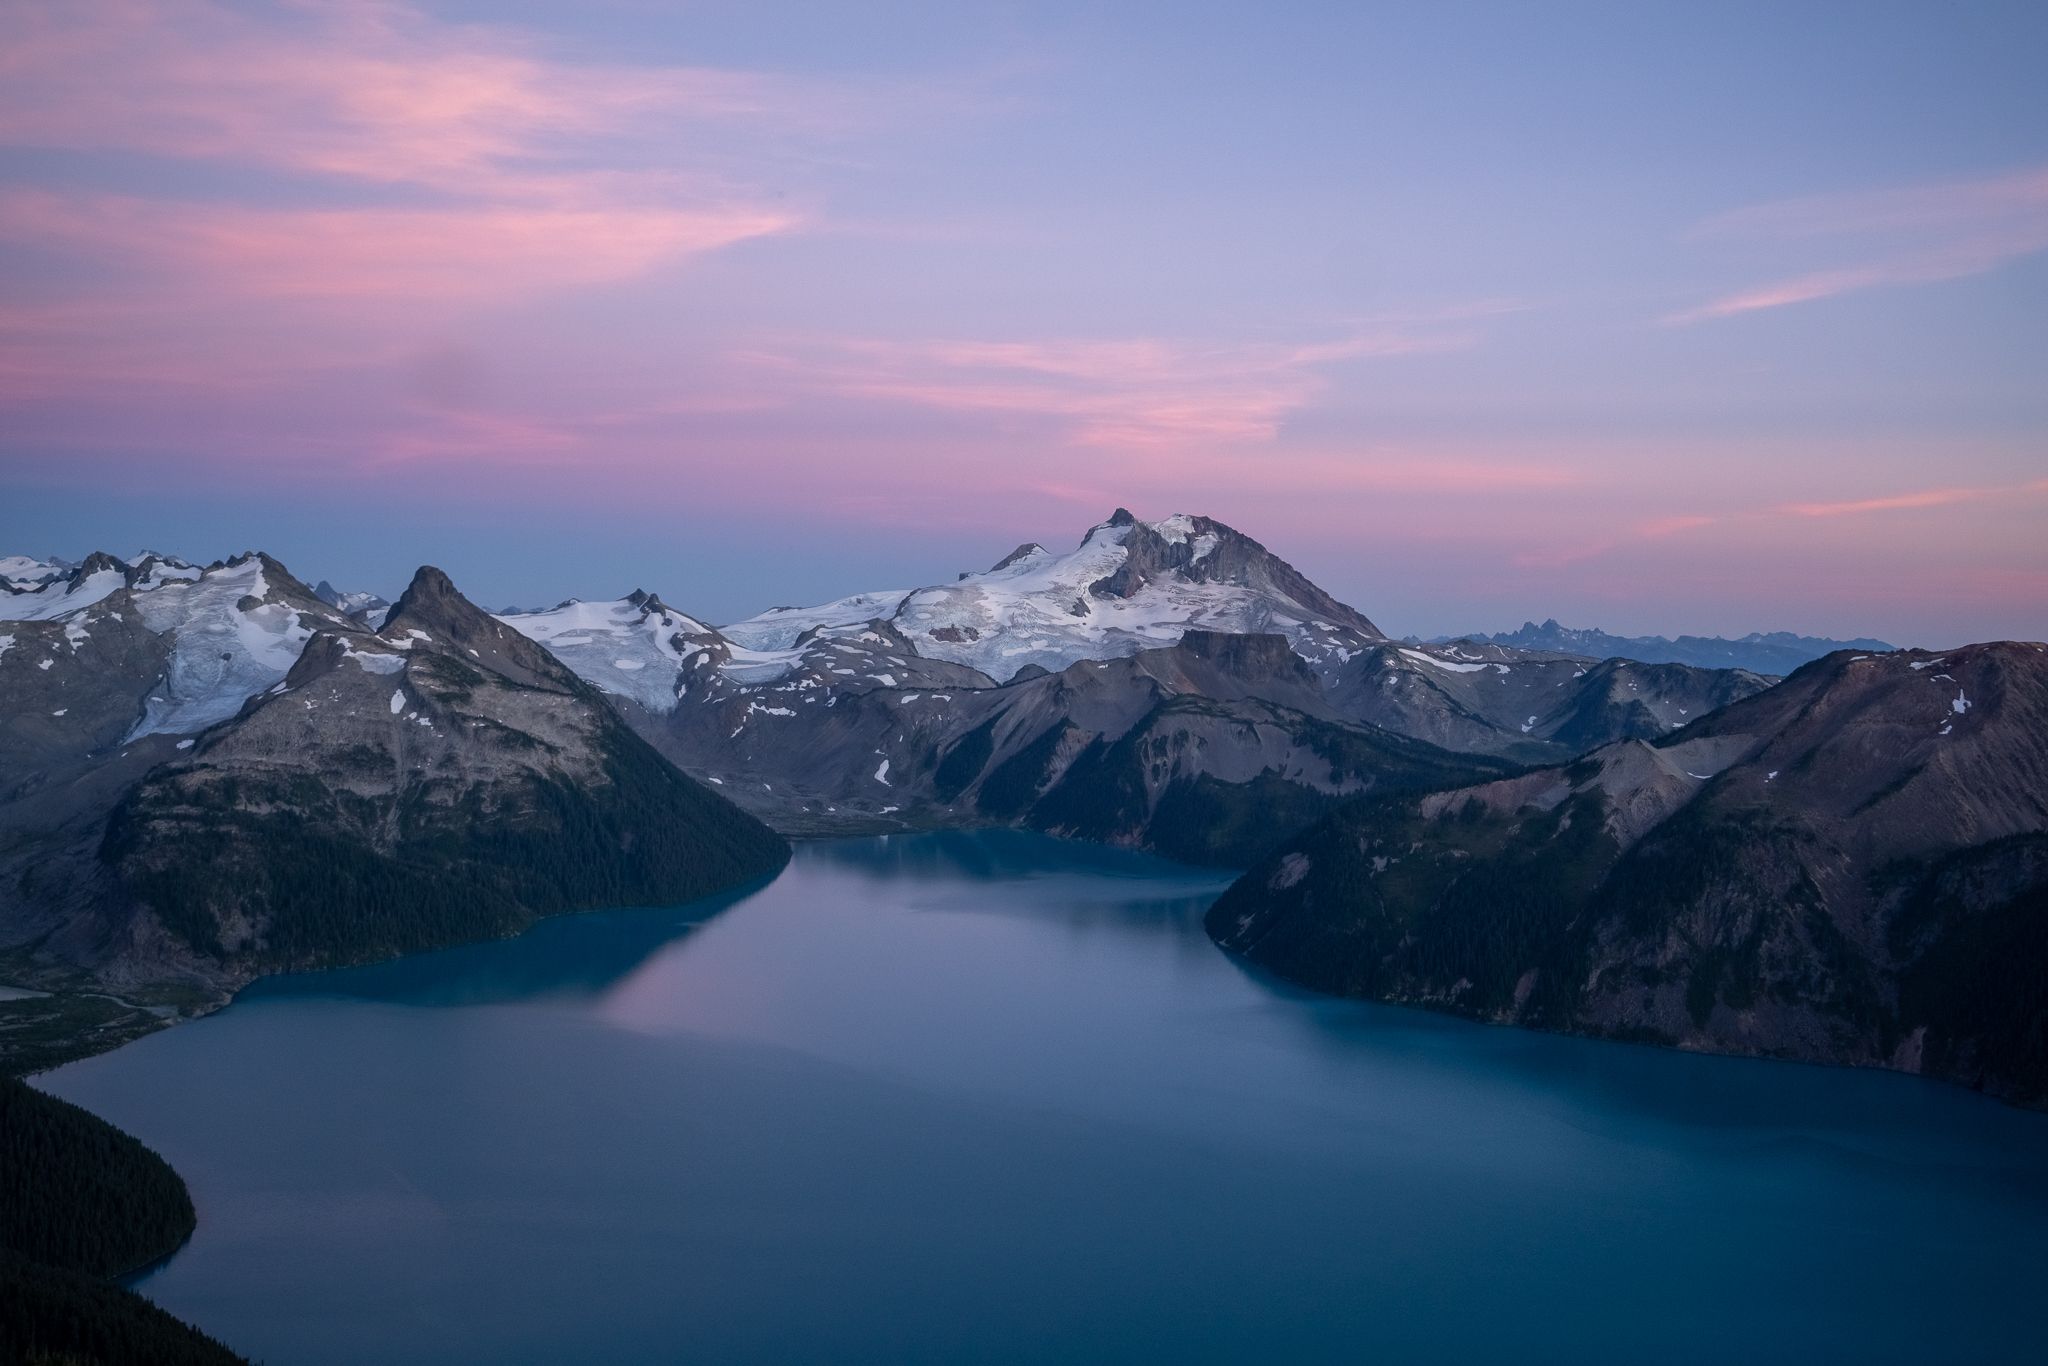 Panorama Ridge Sunset - Garibaldi Provincial Park